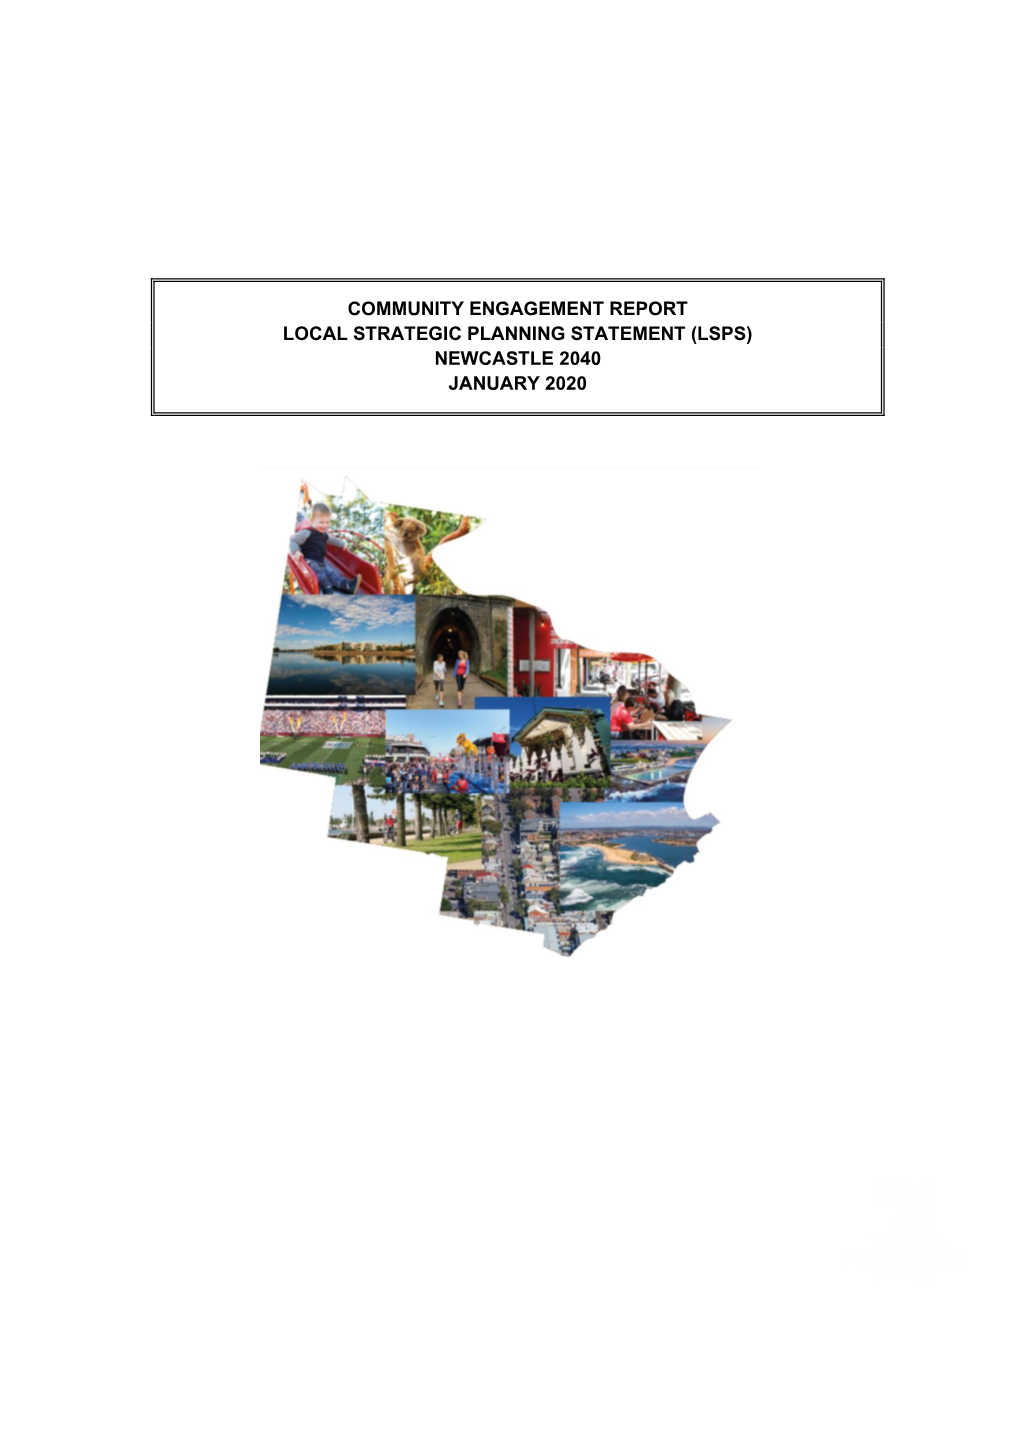 Community Engagement Report Local Strategic Planning Statement (Lsps) Newcastle 2040 January 2020